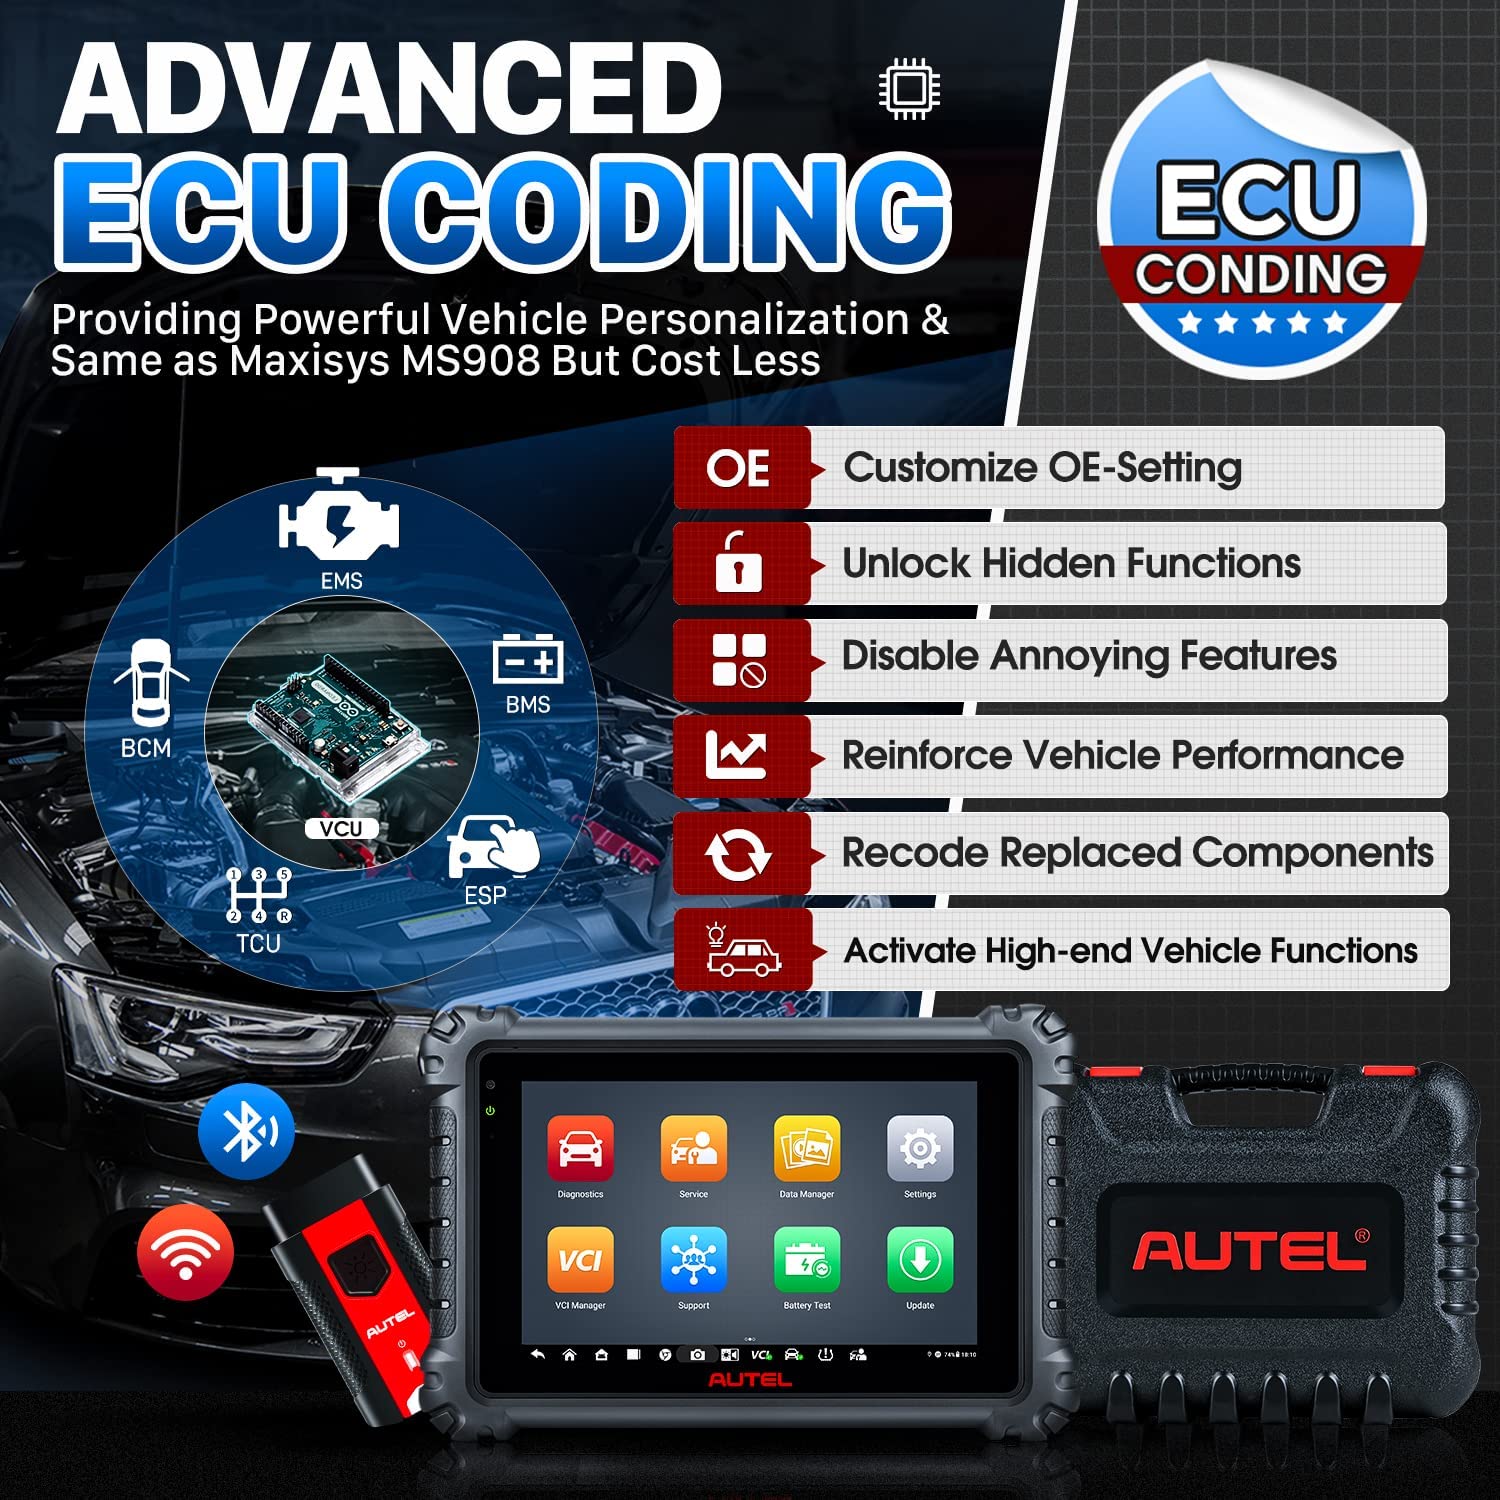 Autel MK906 Pro advanced ecu coding